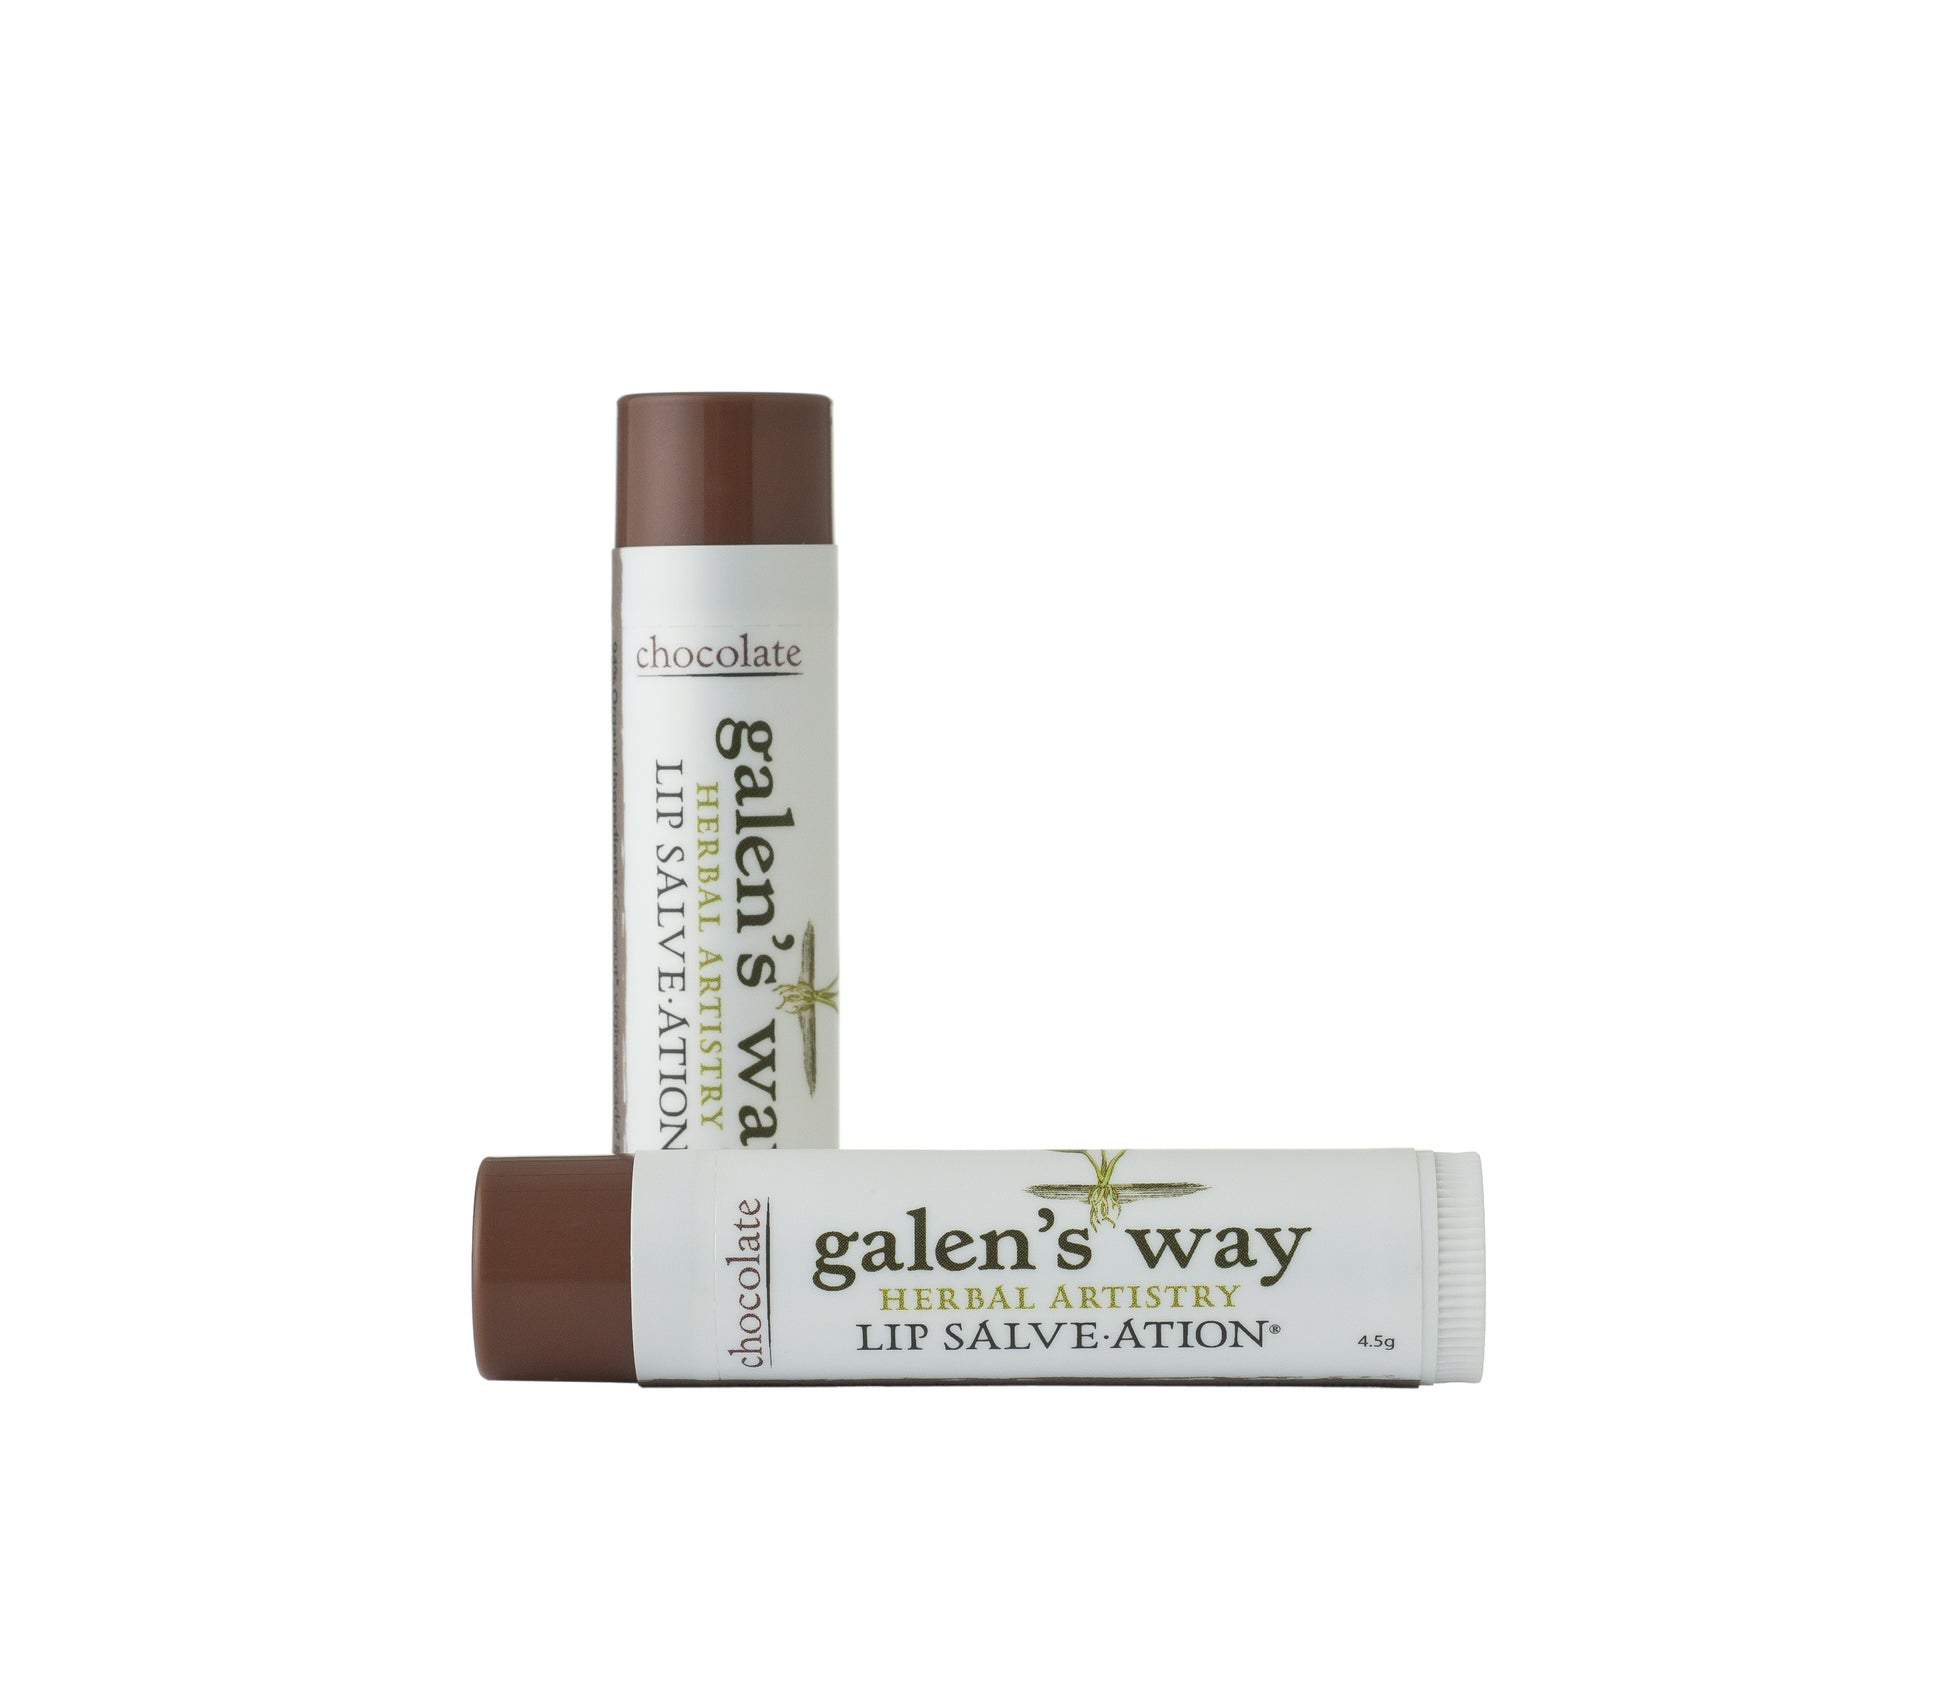 Galen's Way Lip Salve-ation Chocolate